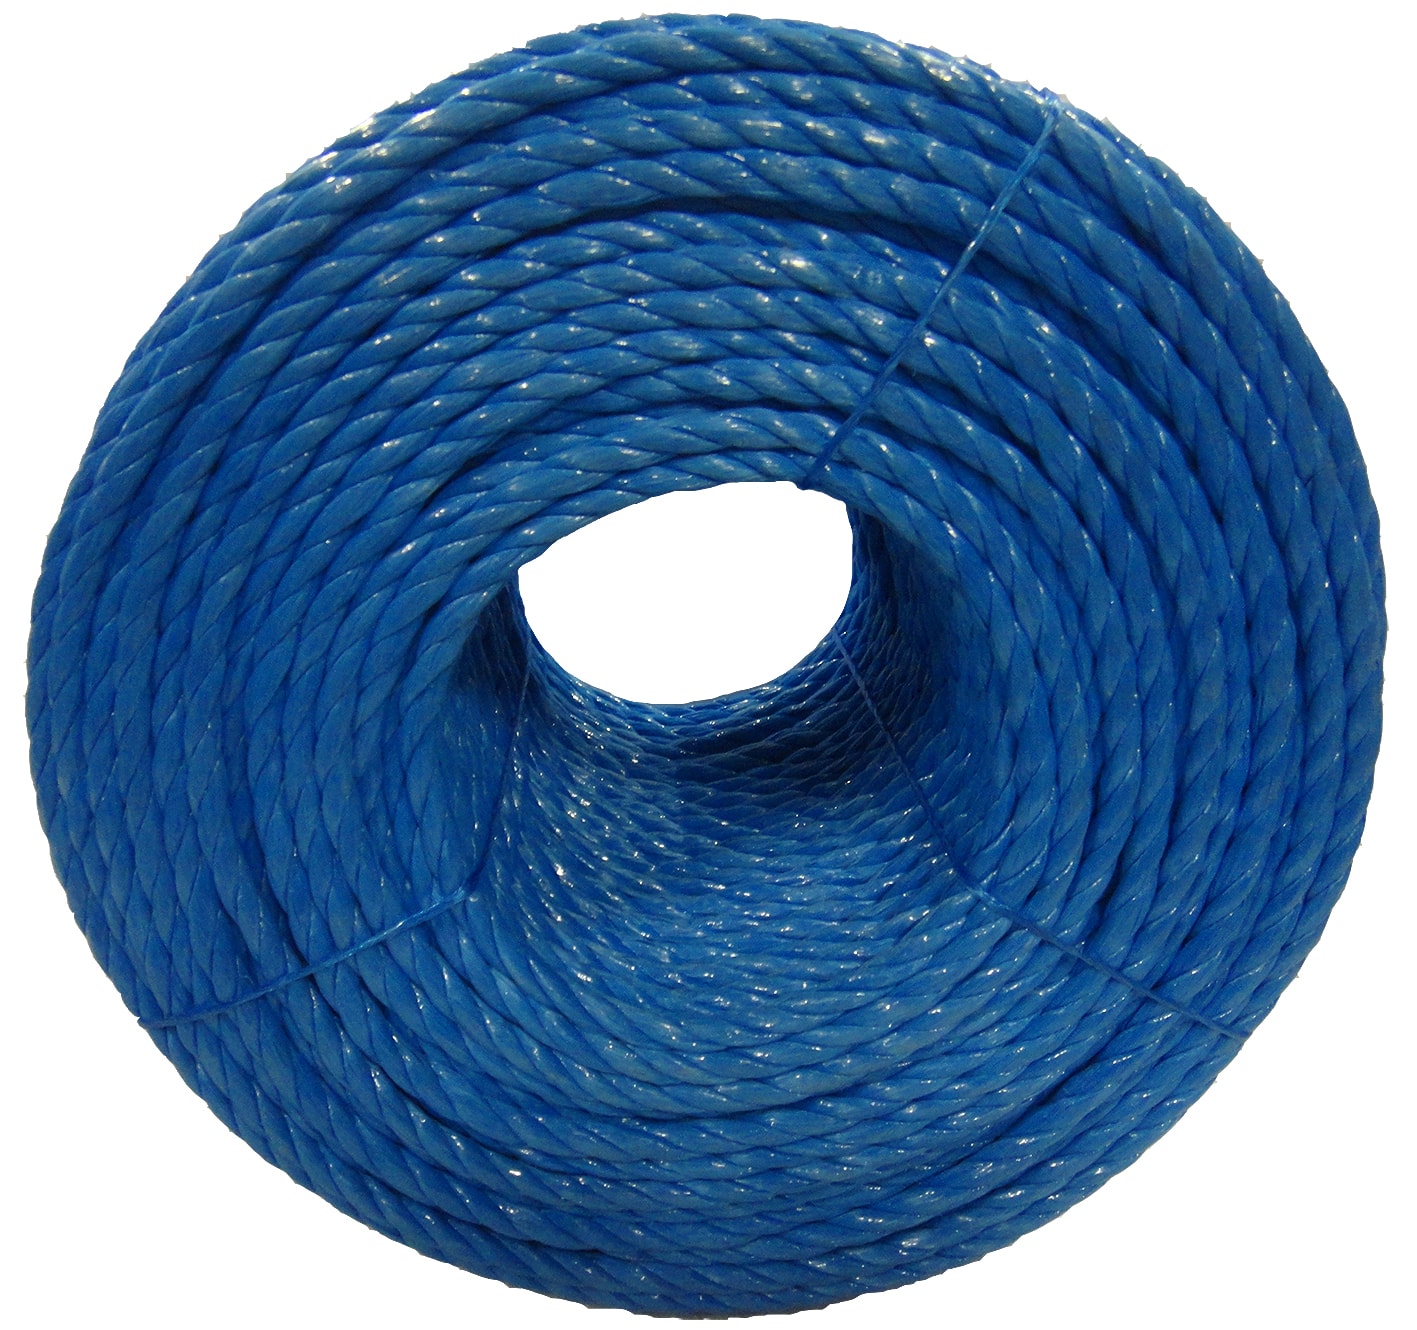 12mm Blue Polypropylene Rope x 220m Coil